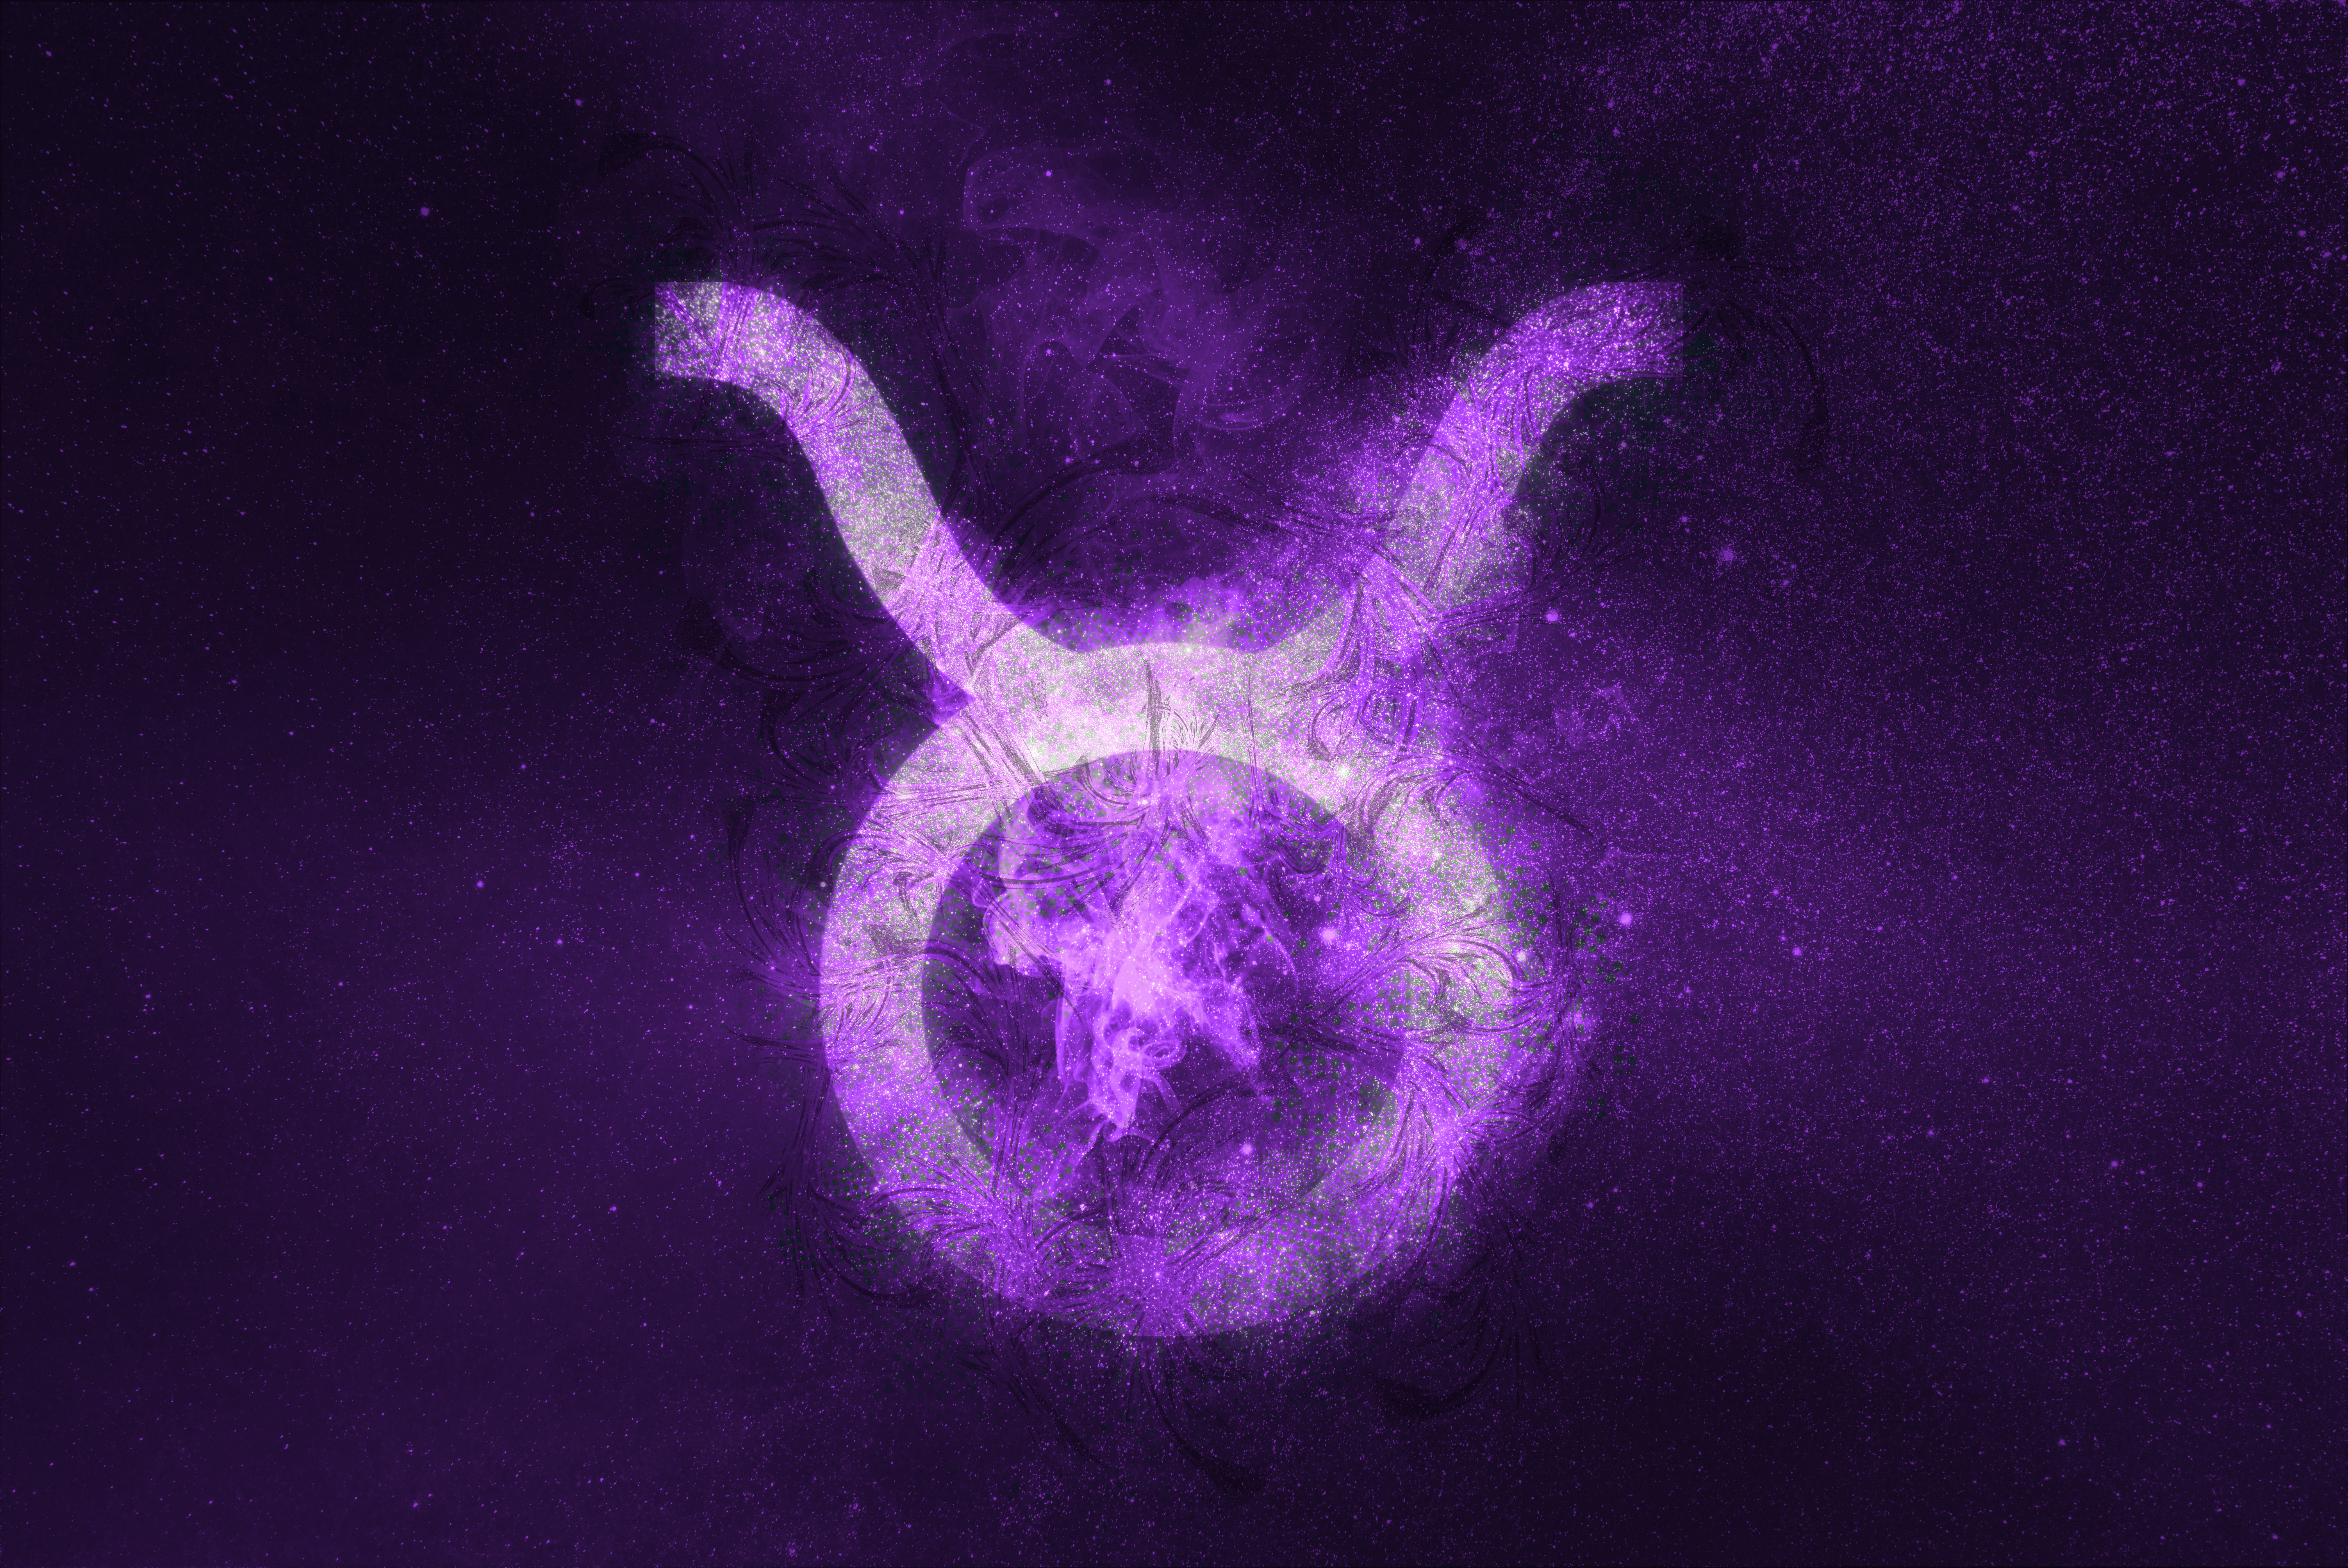  Image of the Taurus symbol